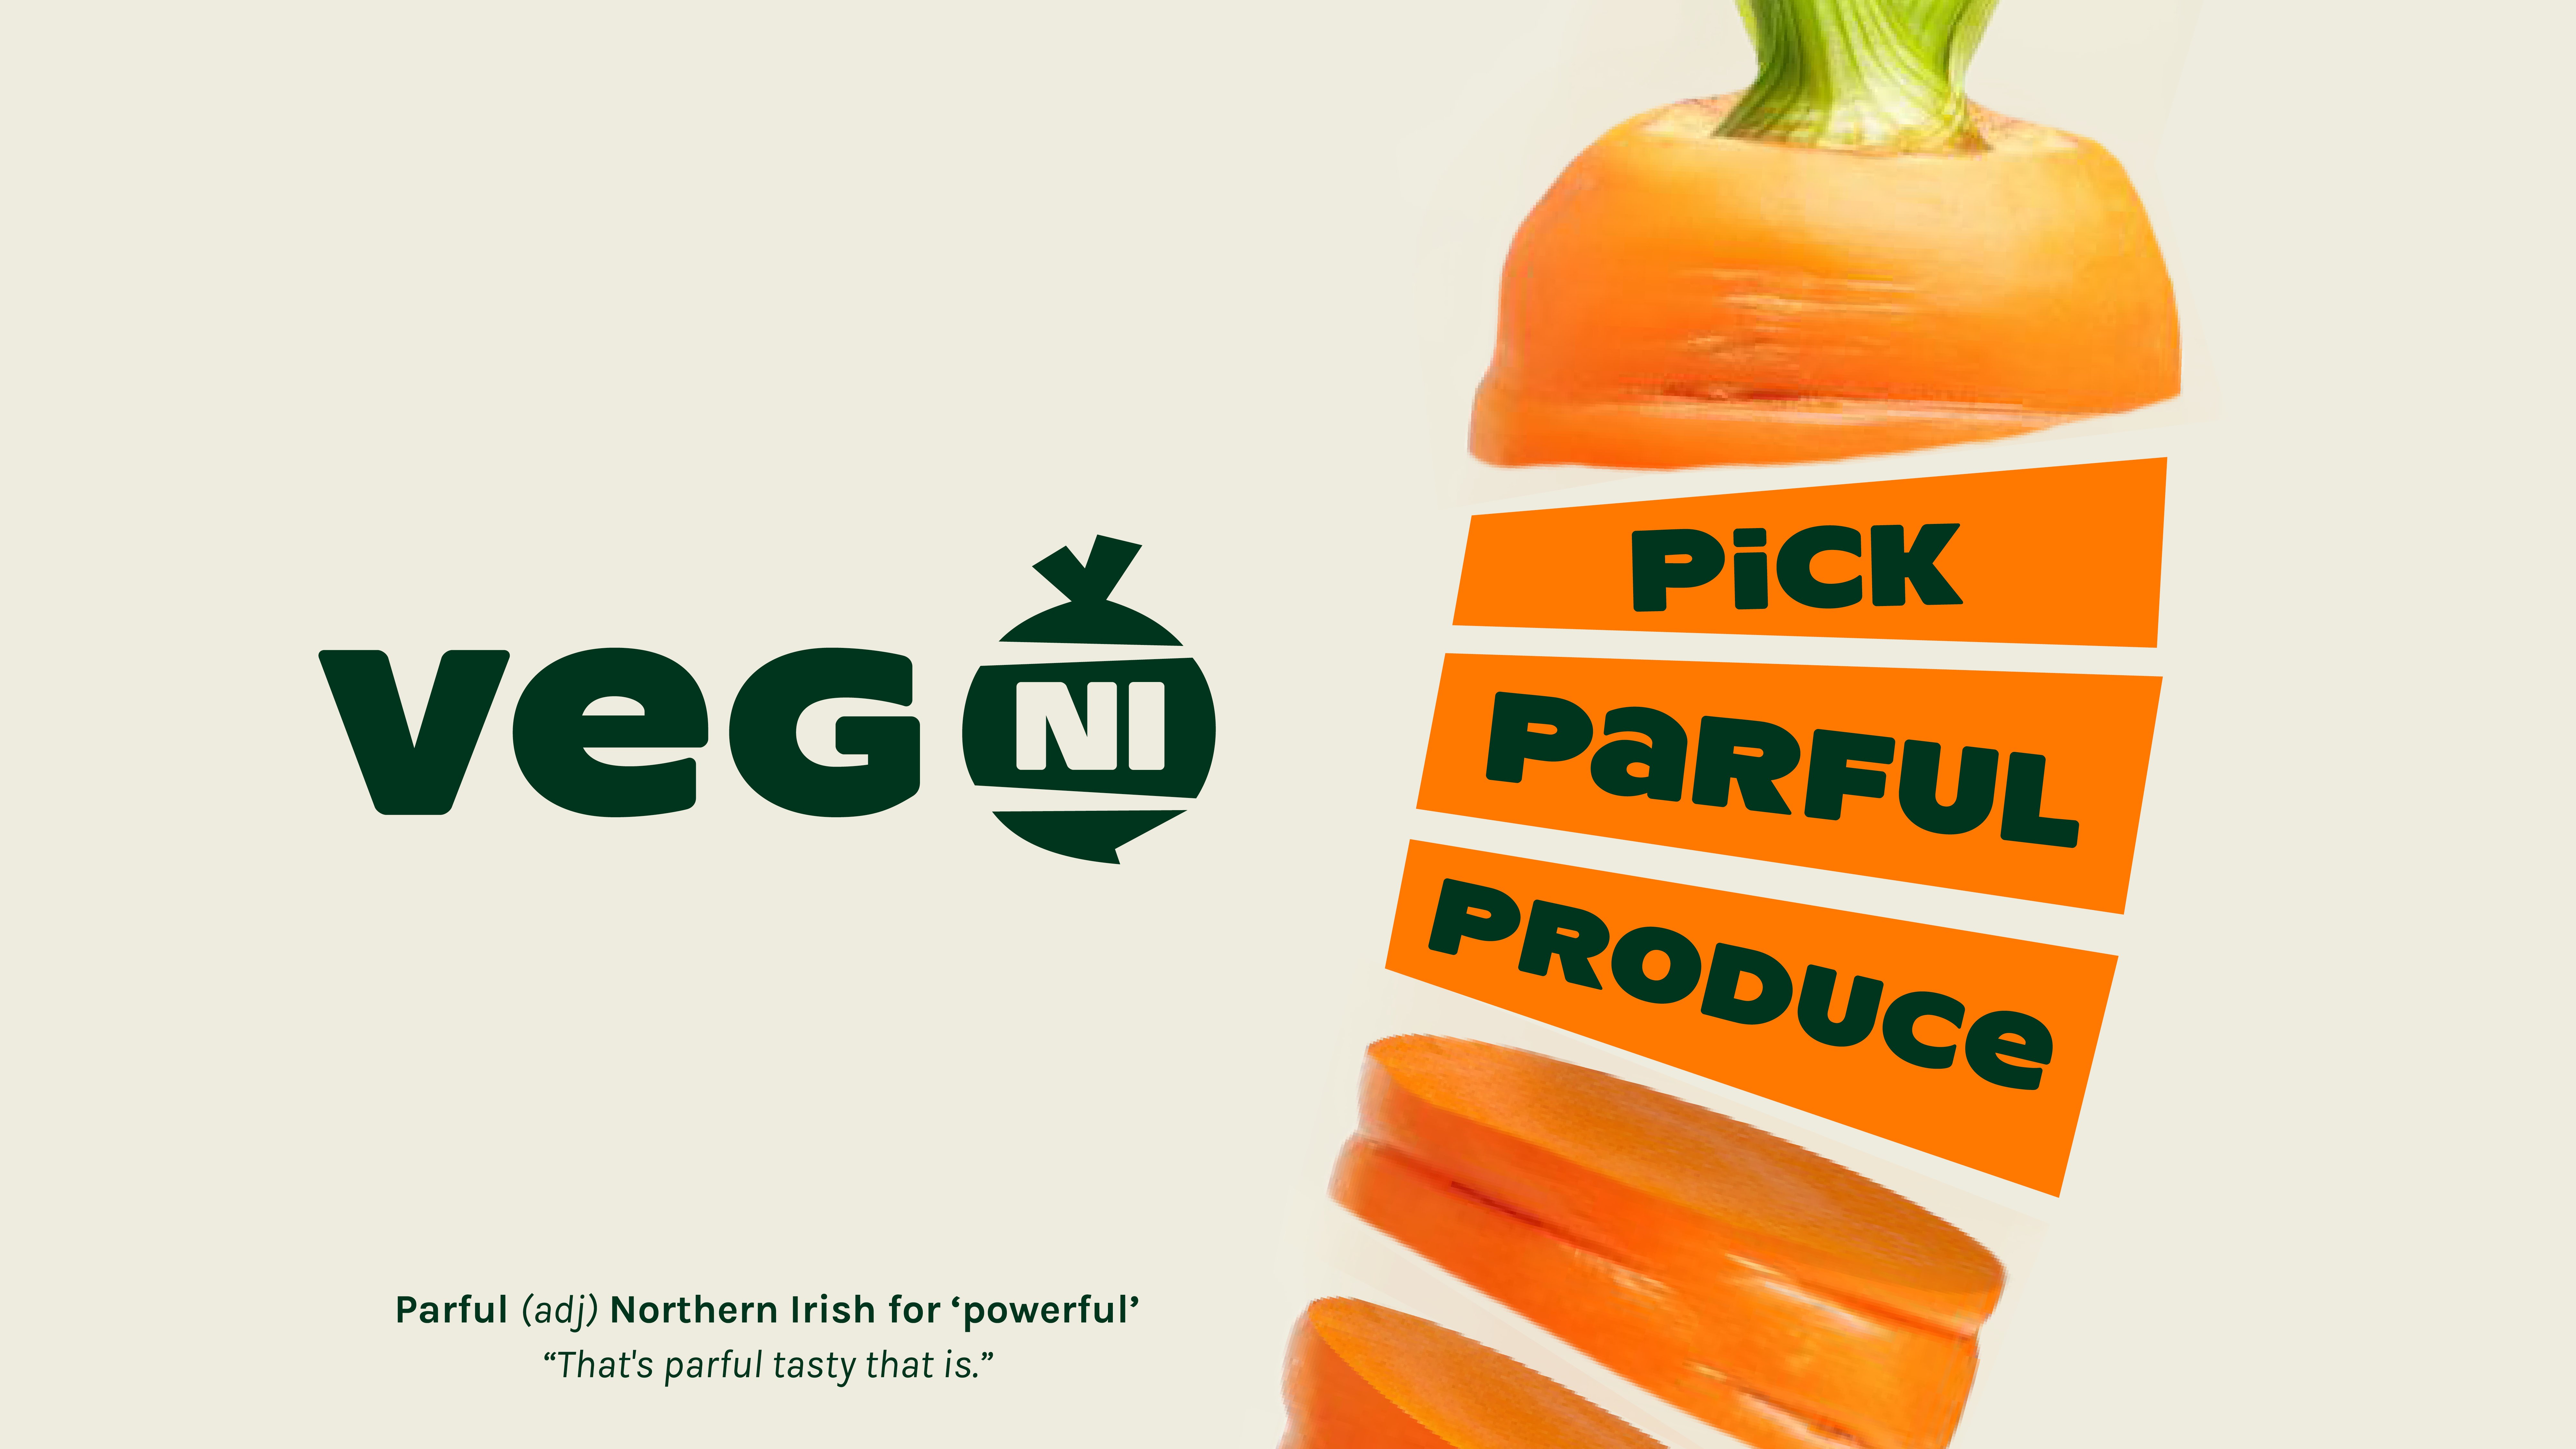 Brand identity designed by Jack Renwick Studio for Northern Irish farming cooperative Veg NI